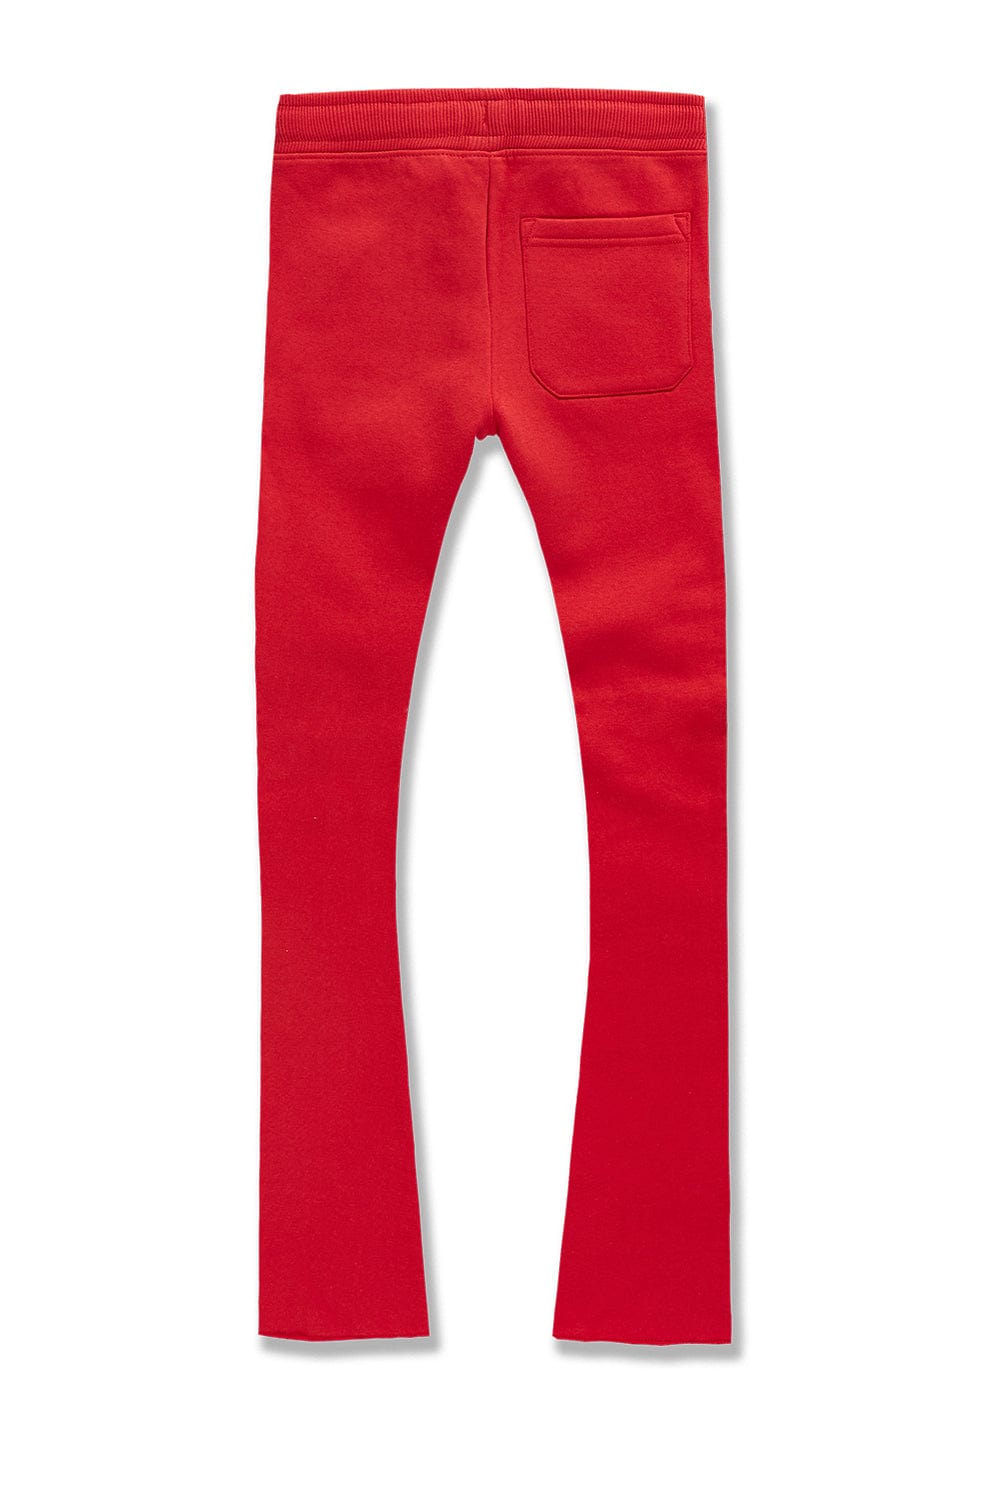 JC Kids Kids Uptown Stacked Sweatpants (Red)